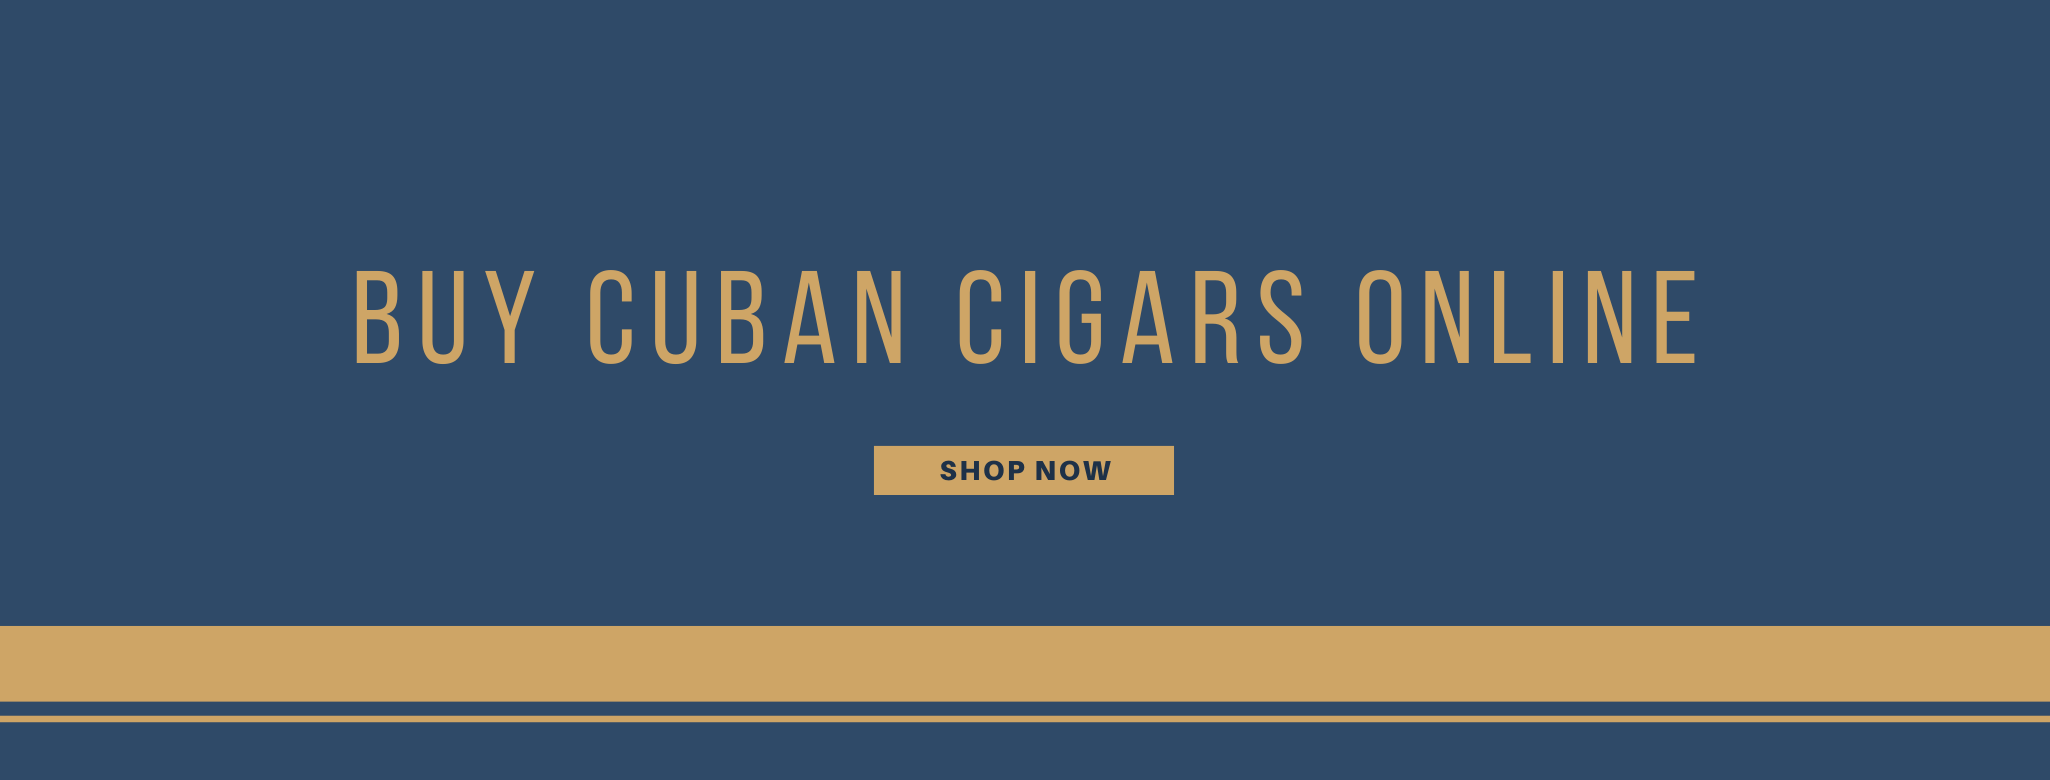 Buy Cuban cigars online